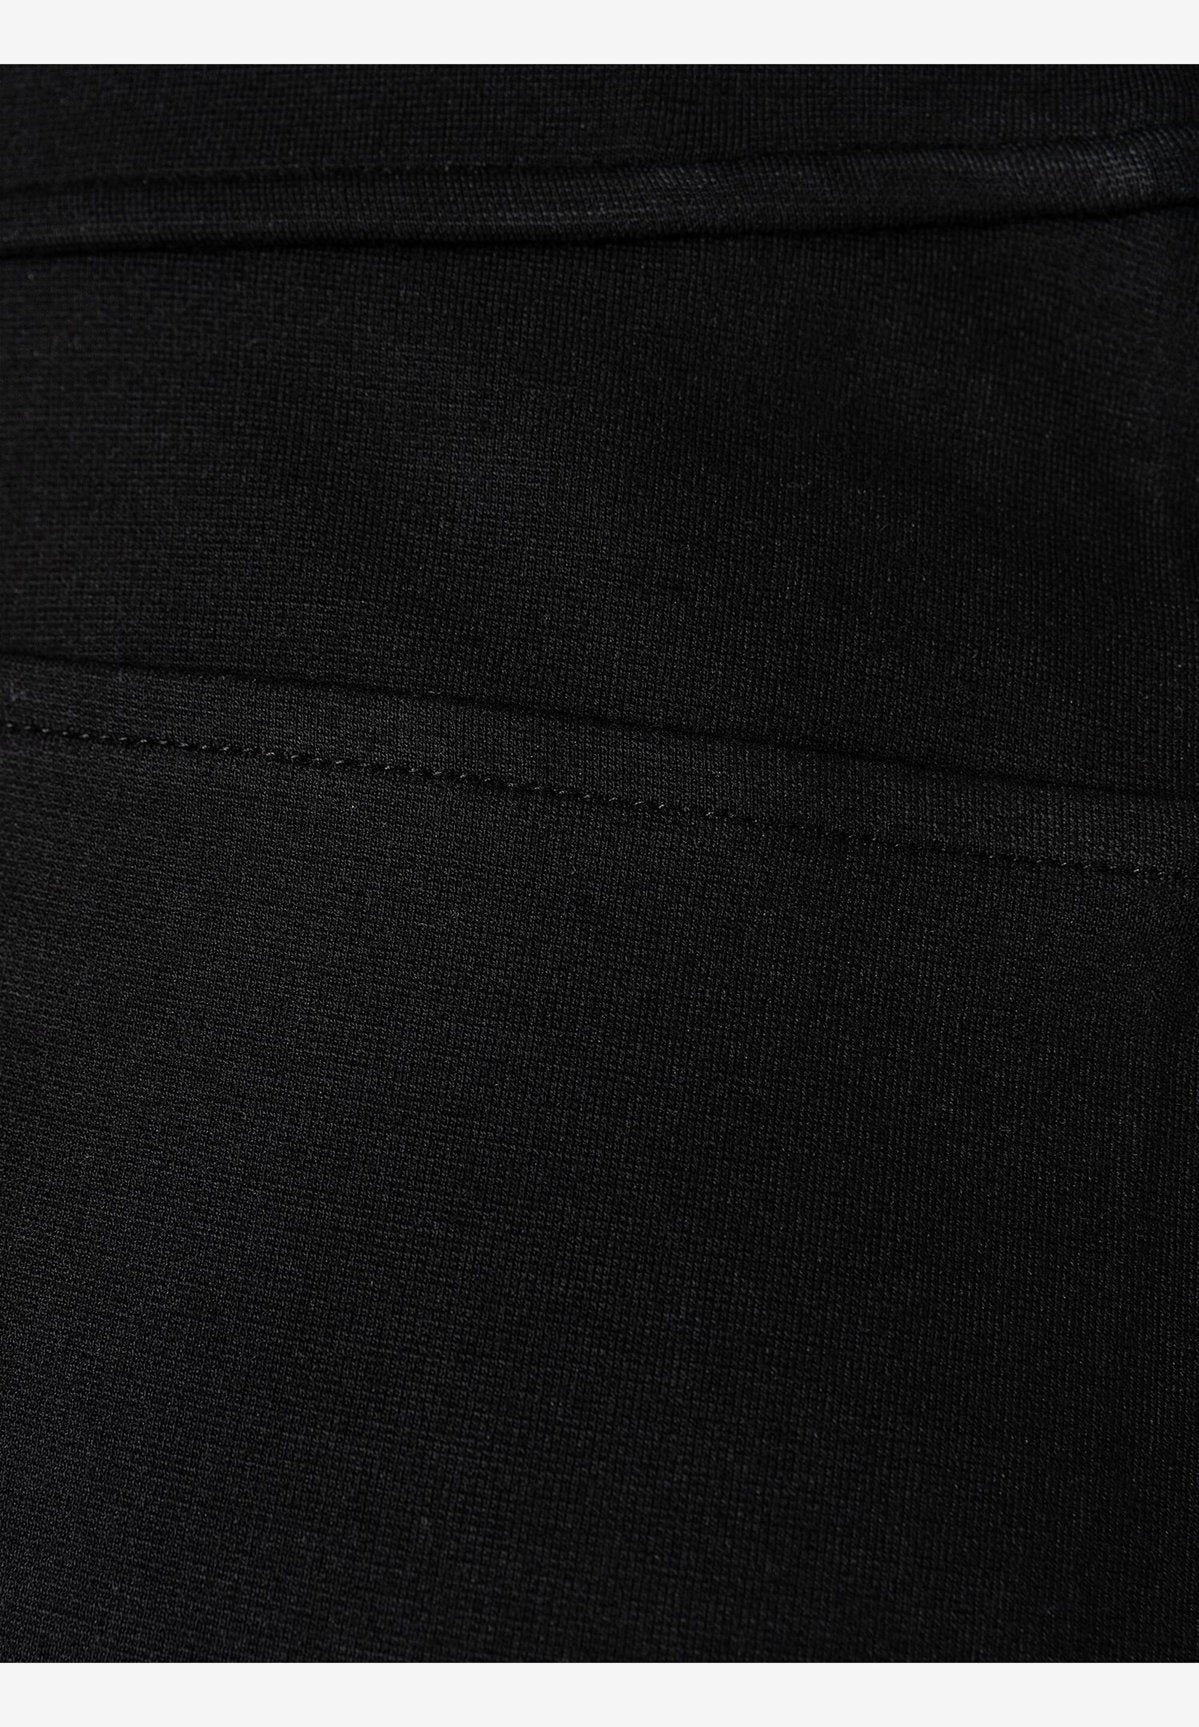 Black Jersey Trousers_41014000_0790_05